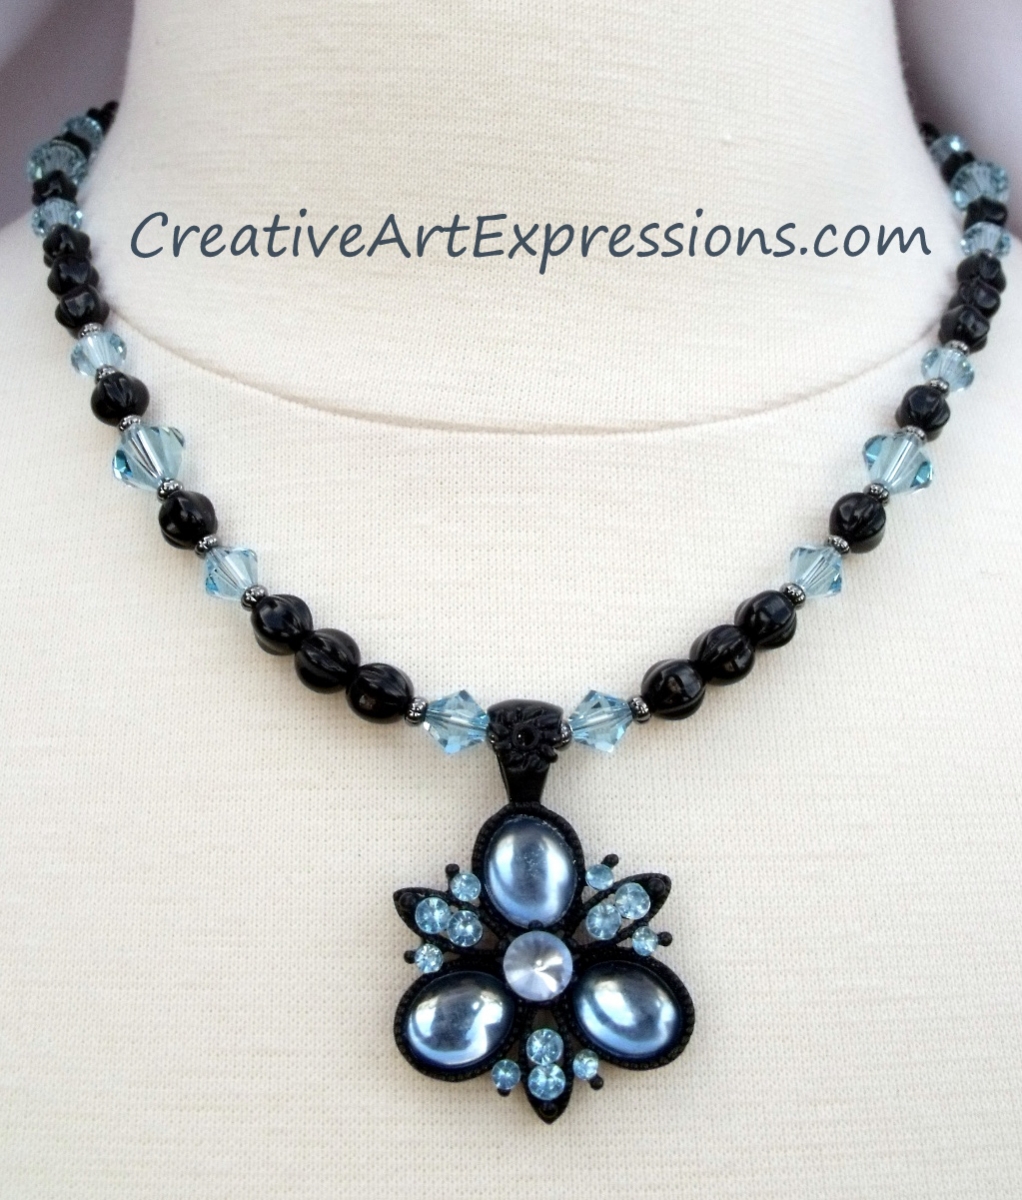 Blue & Black Necklace Jewelry Design